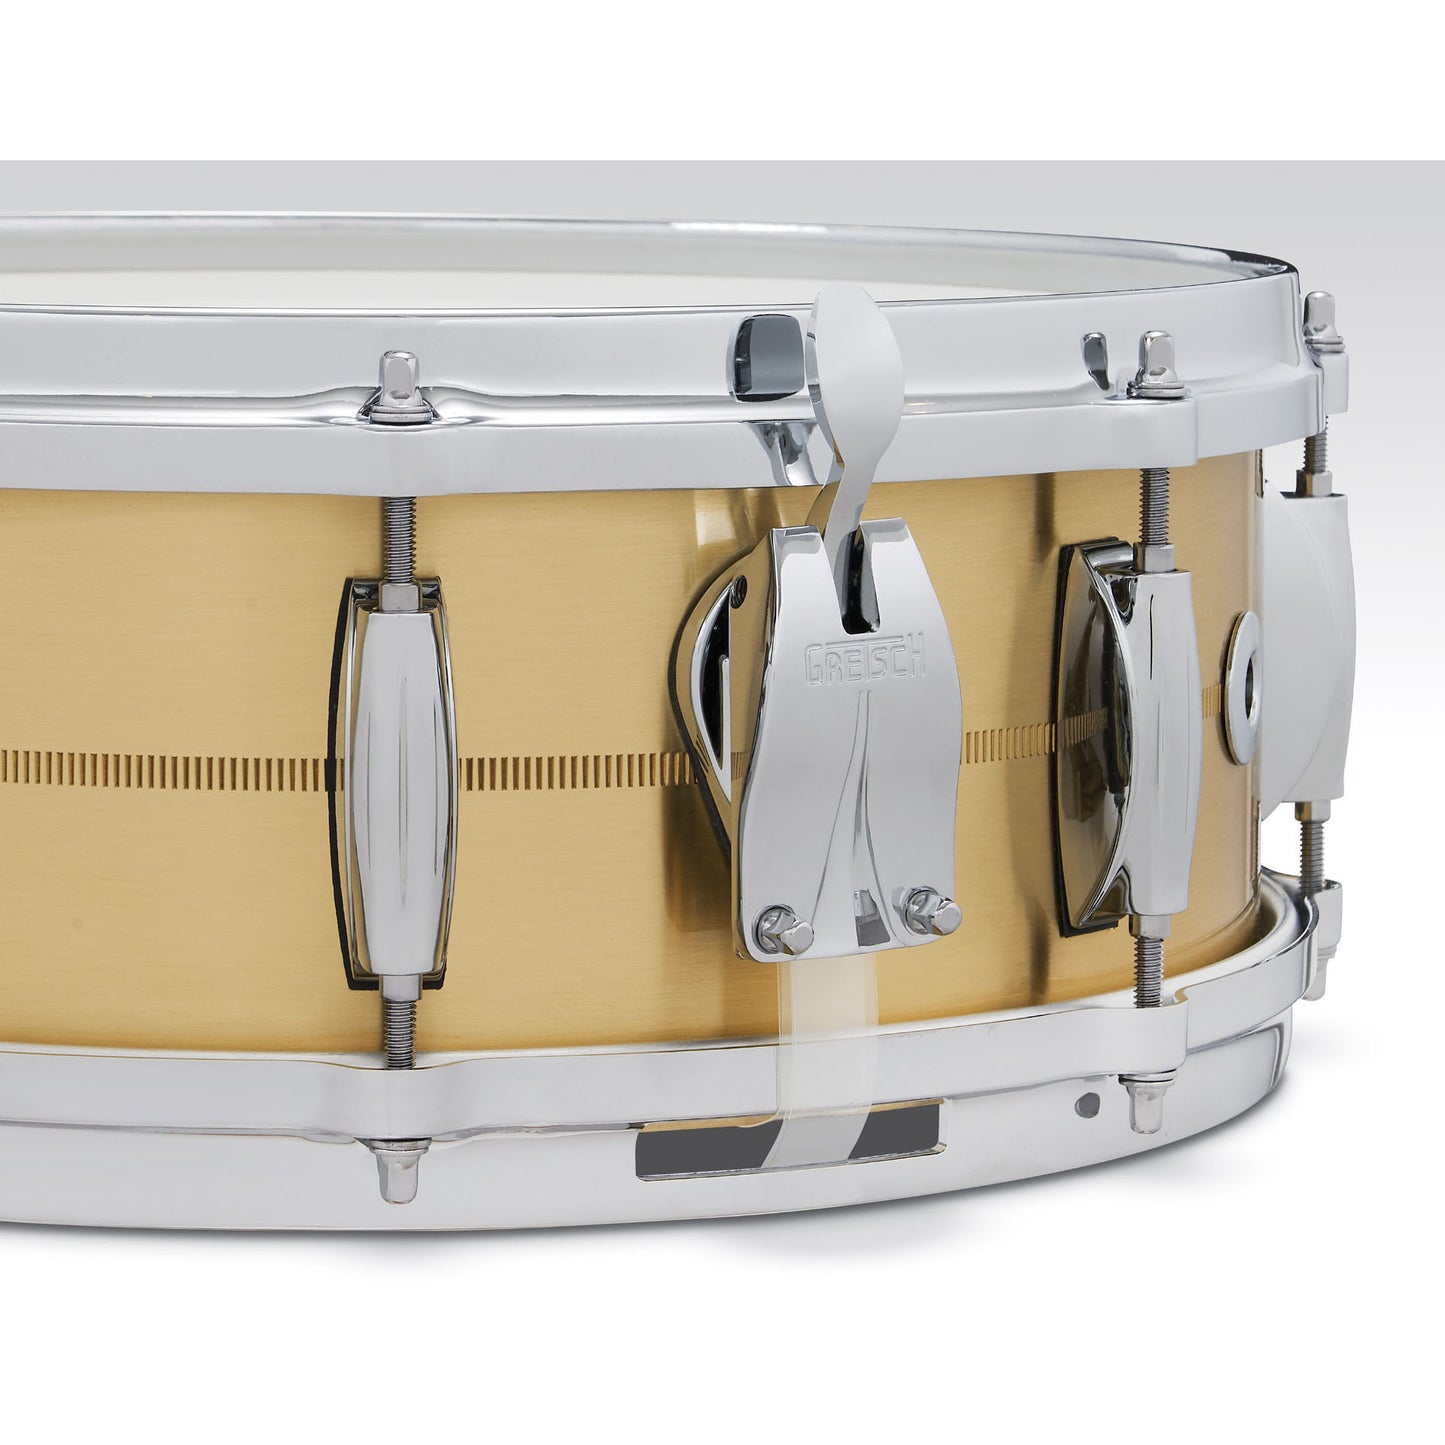 Gretsch USA Custom Limited Edition 5x14 Bell Brass Snare Drum